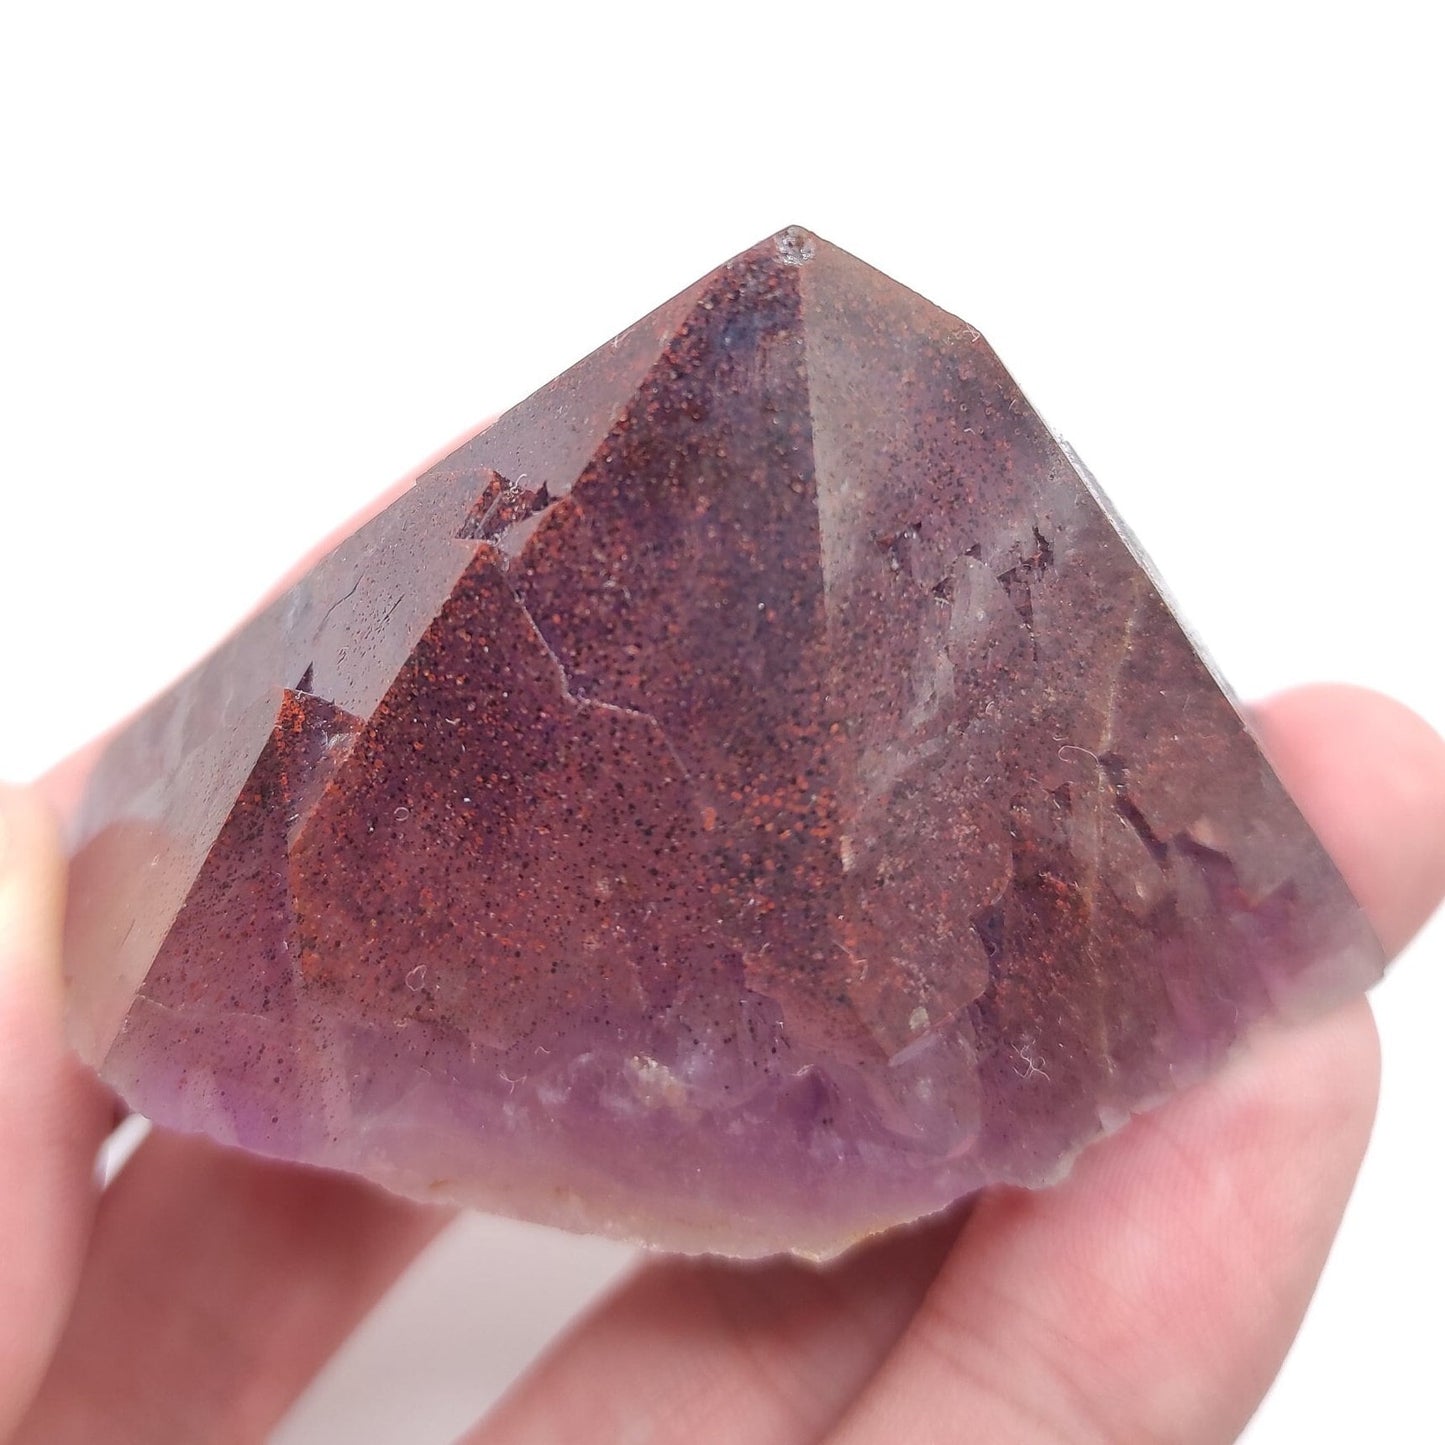 117g Thunder Bay Amethyst - Hematite Coated Amethyst - Canadian Amethyst Crystal - Amethyst Thunder Bay - Red Amethyst - Mineral Specimen